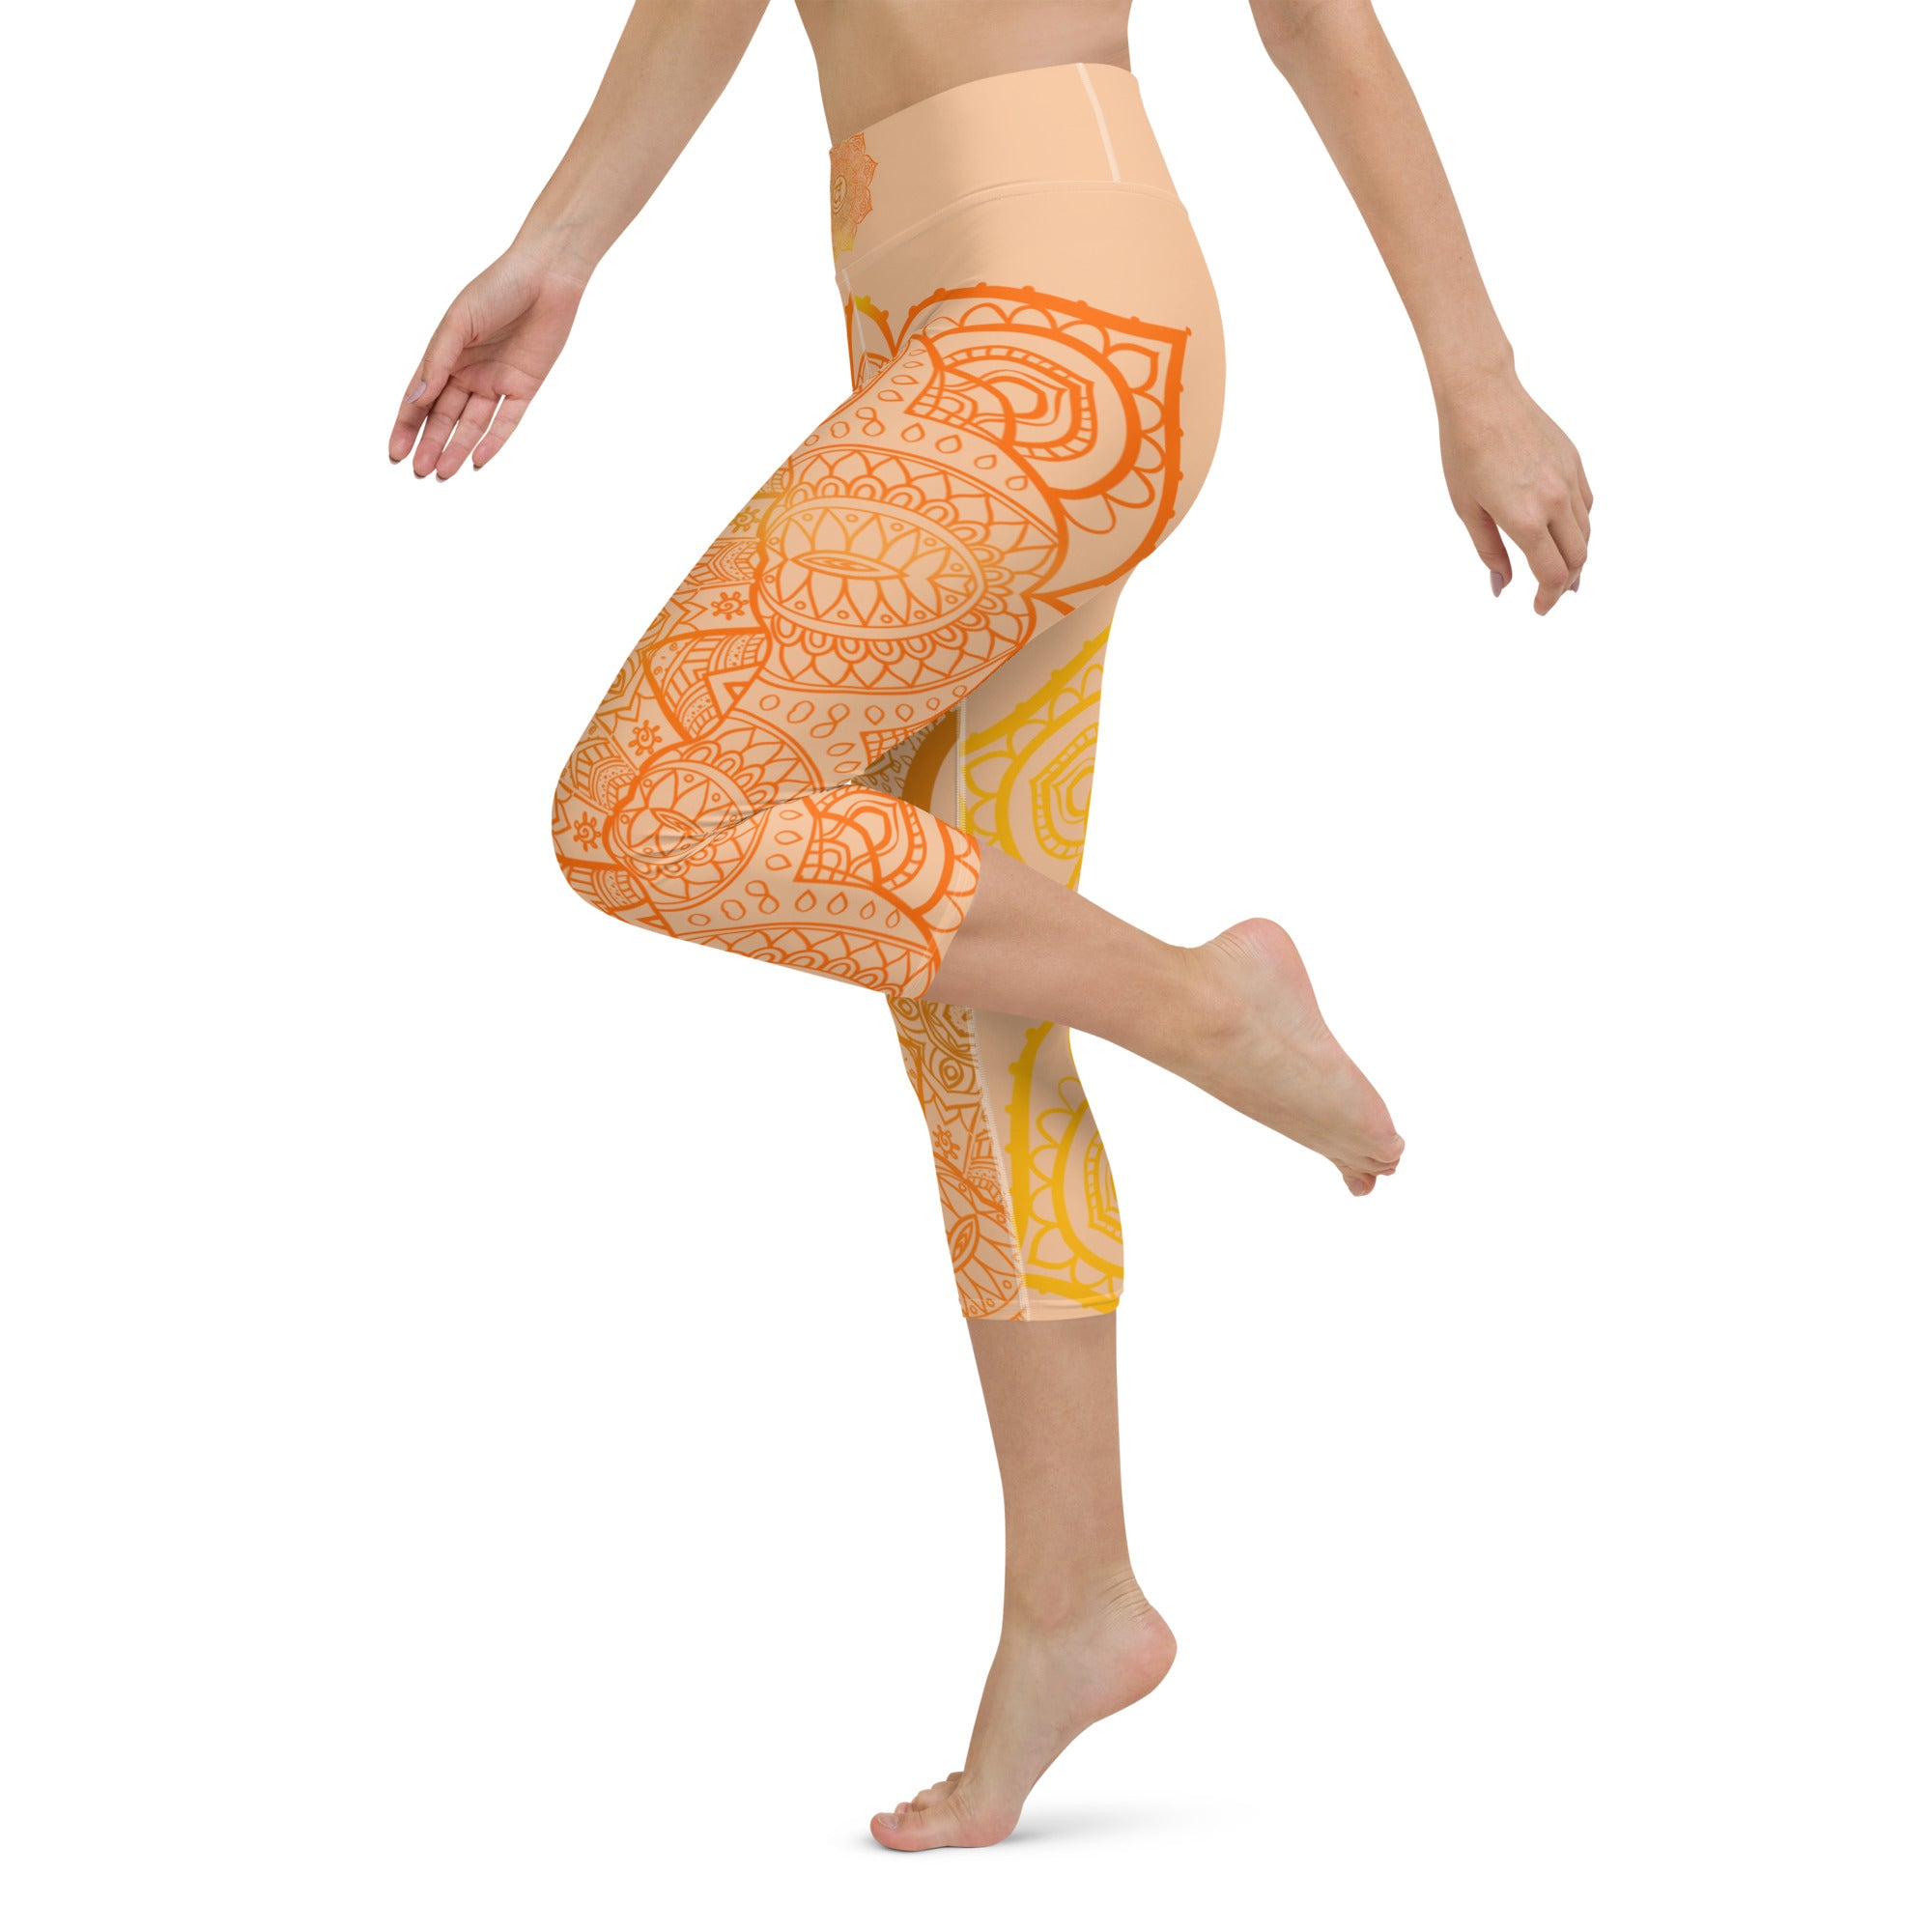 yoga capri leggings by goddess swag. Design is a sacral chakra mandala on front and back of leggings in deep orange and light yellow coloring.  Back waist has goddess swag written in light gold. mid calf legging length.